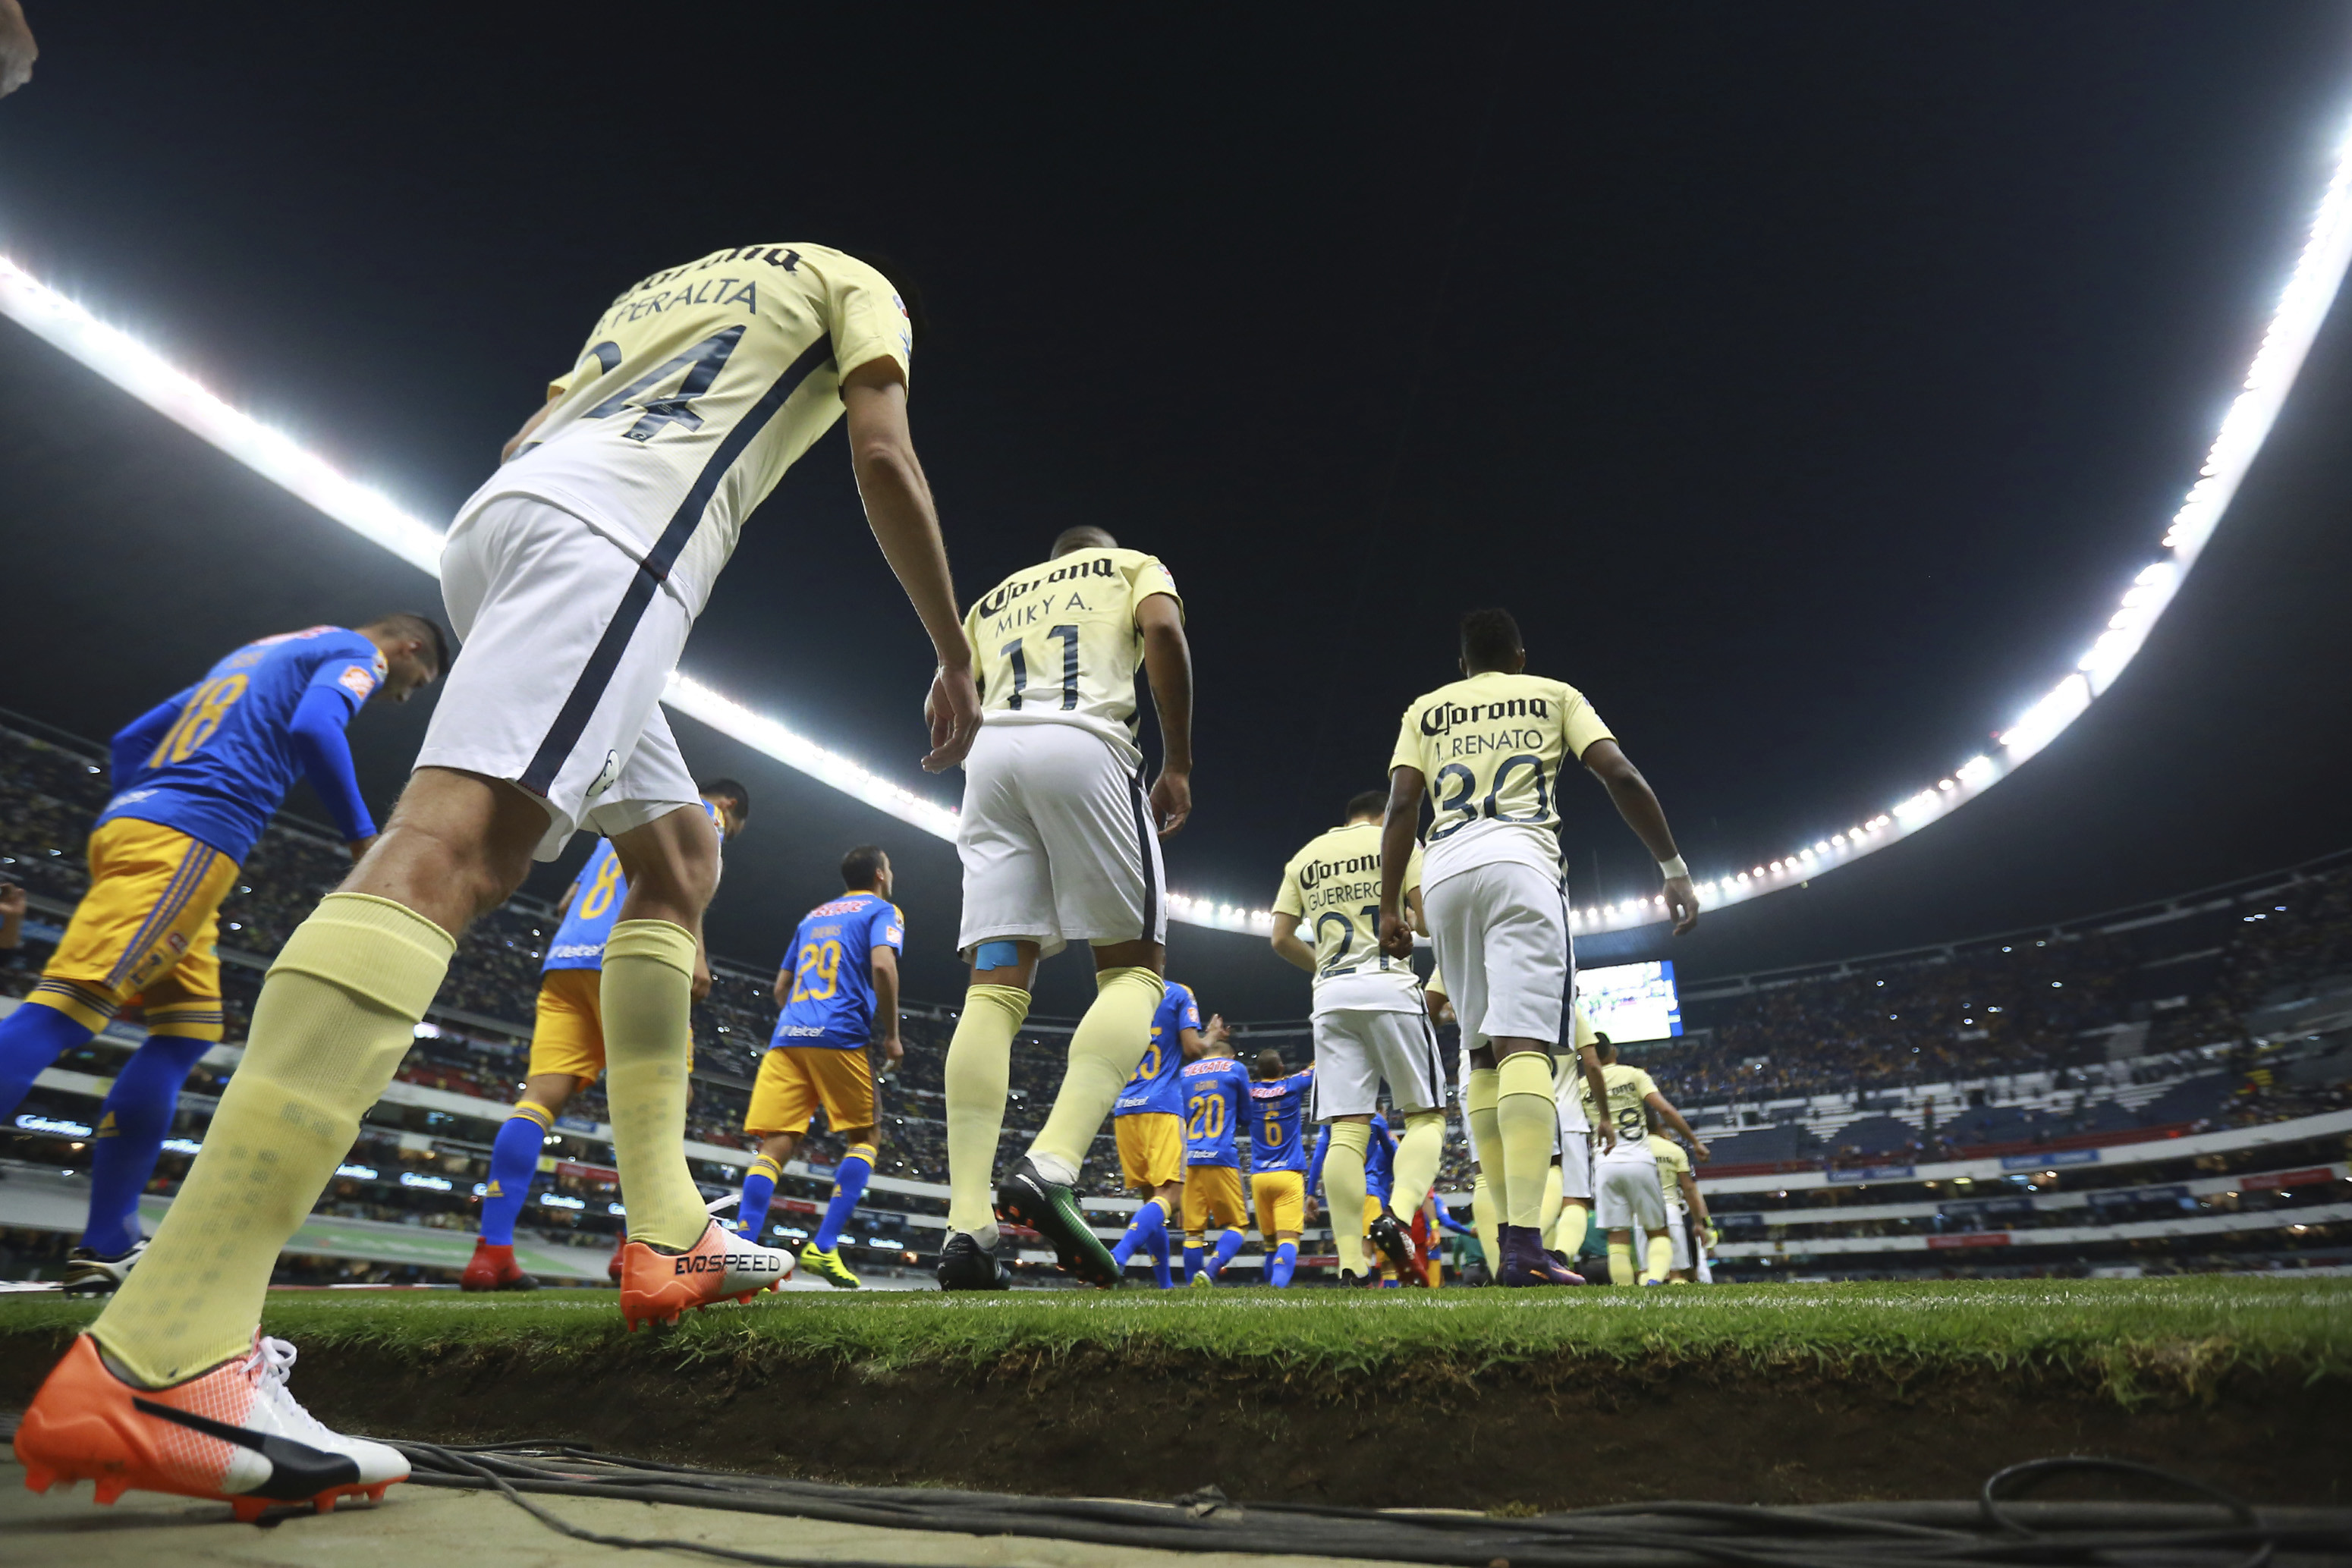 Sub 20 en el empate 1-1 frente a Boca Juniors : r/LigaMX